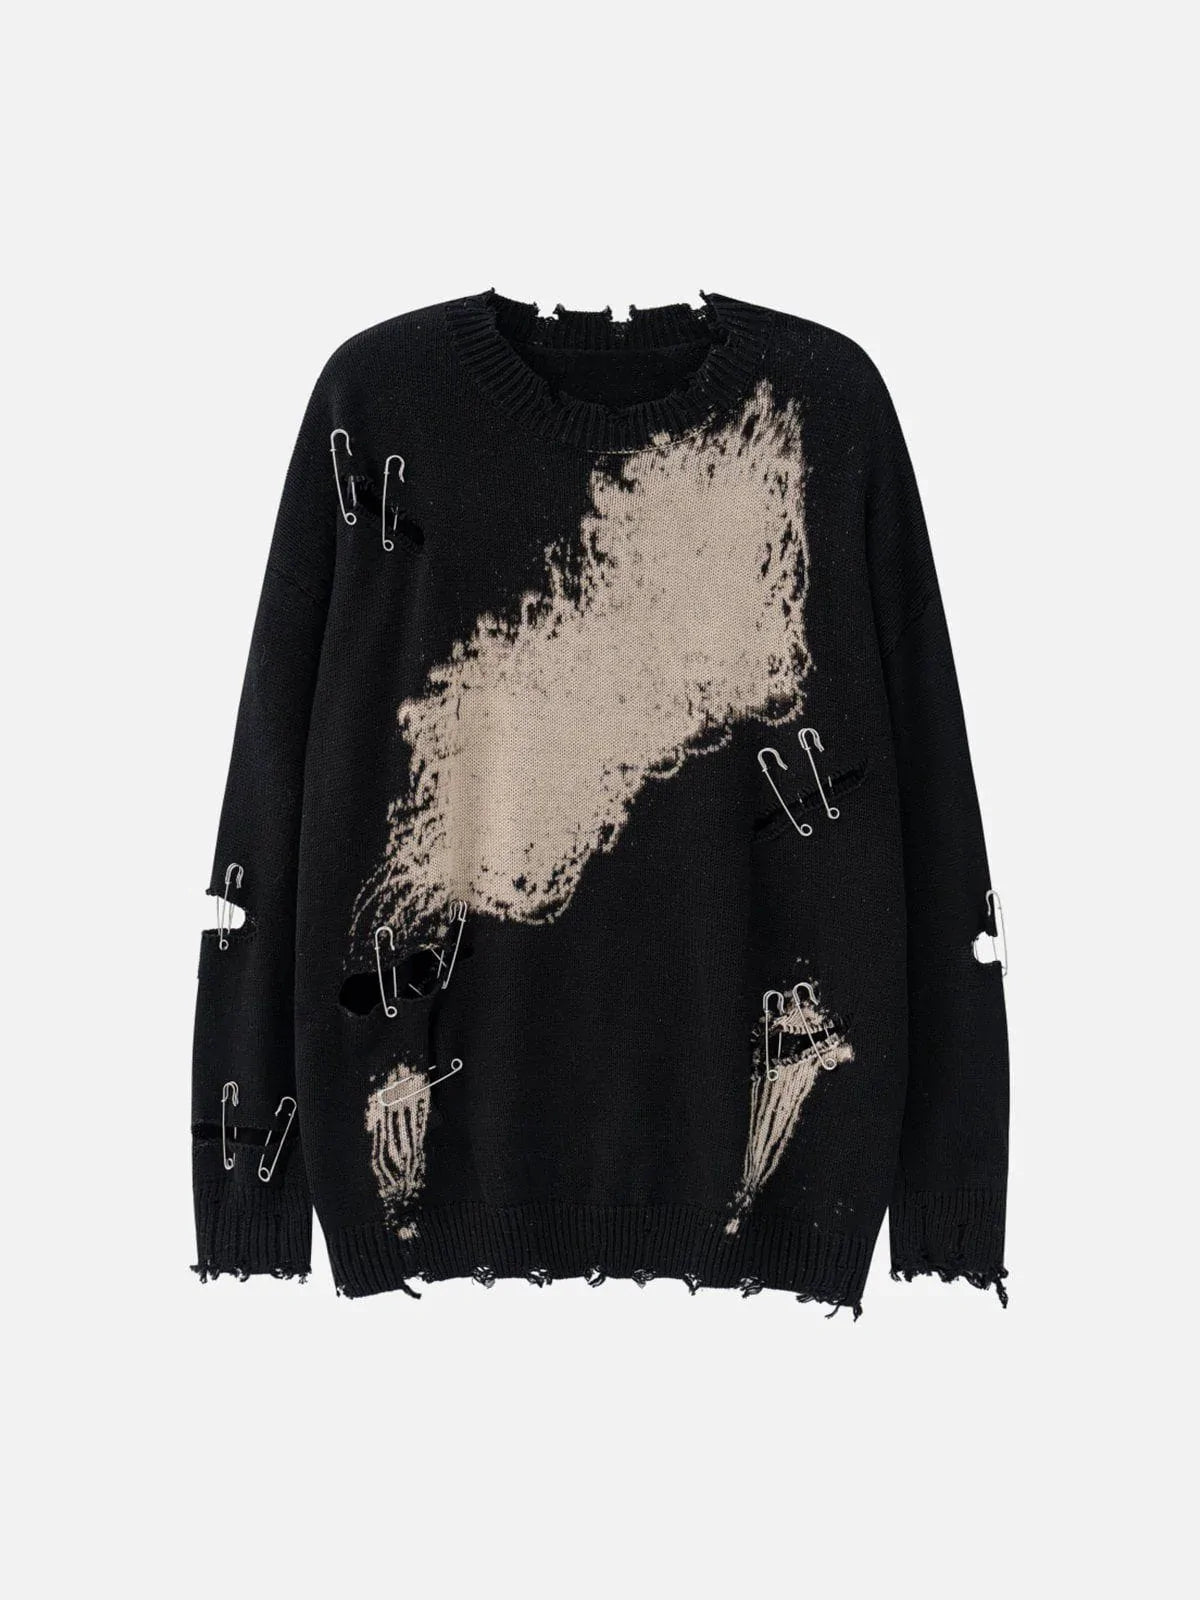 Majesda® - Paperclip Broken Design Knit Sweater outfit ideas streetwear fashion